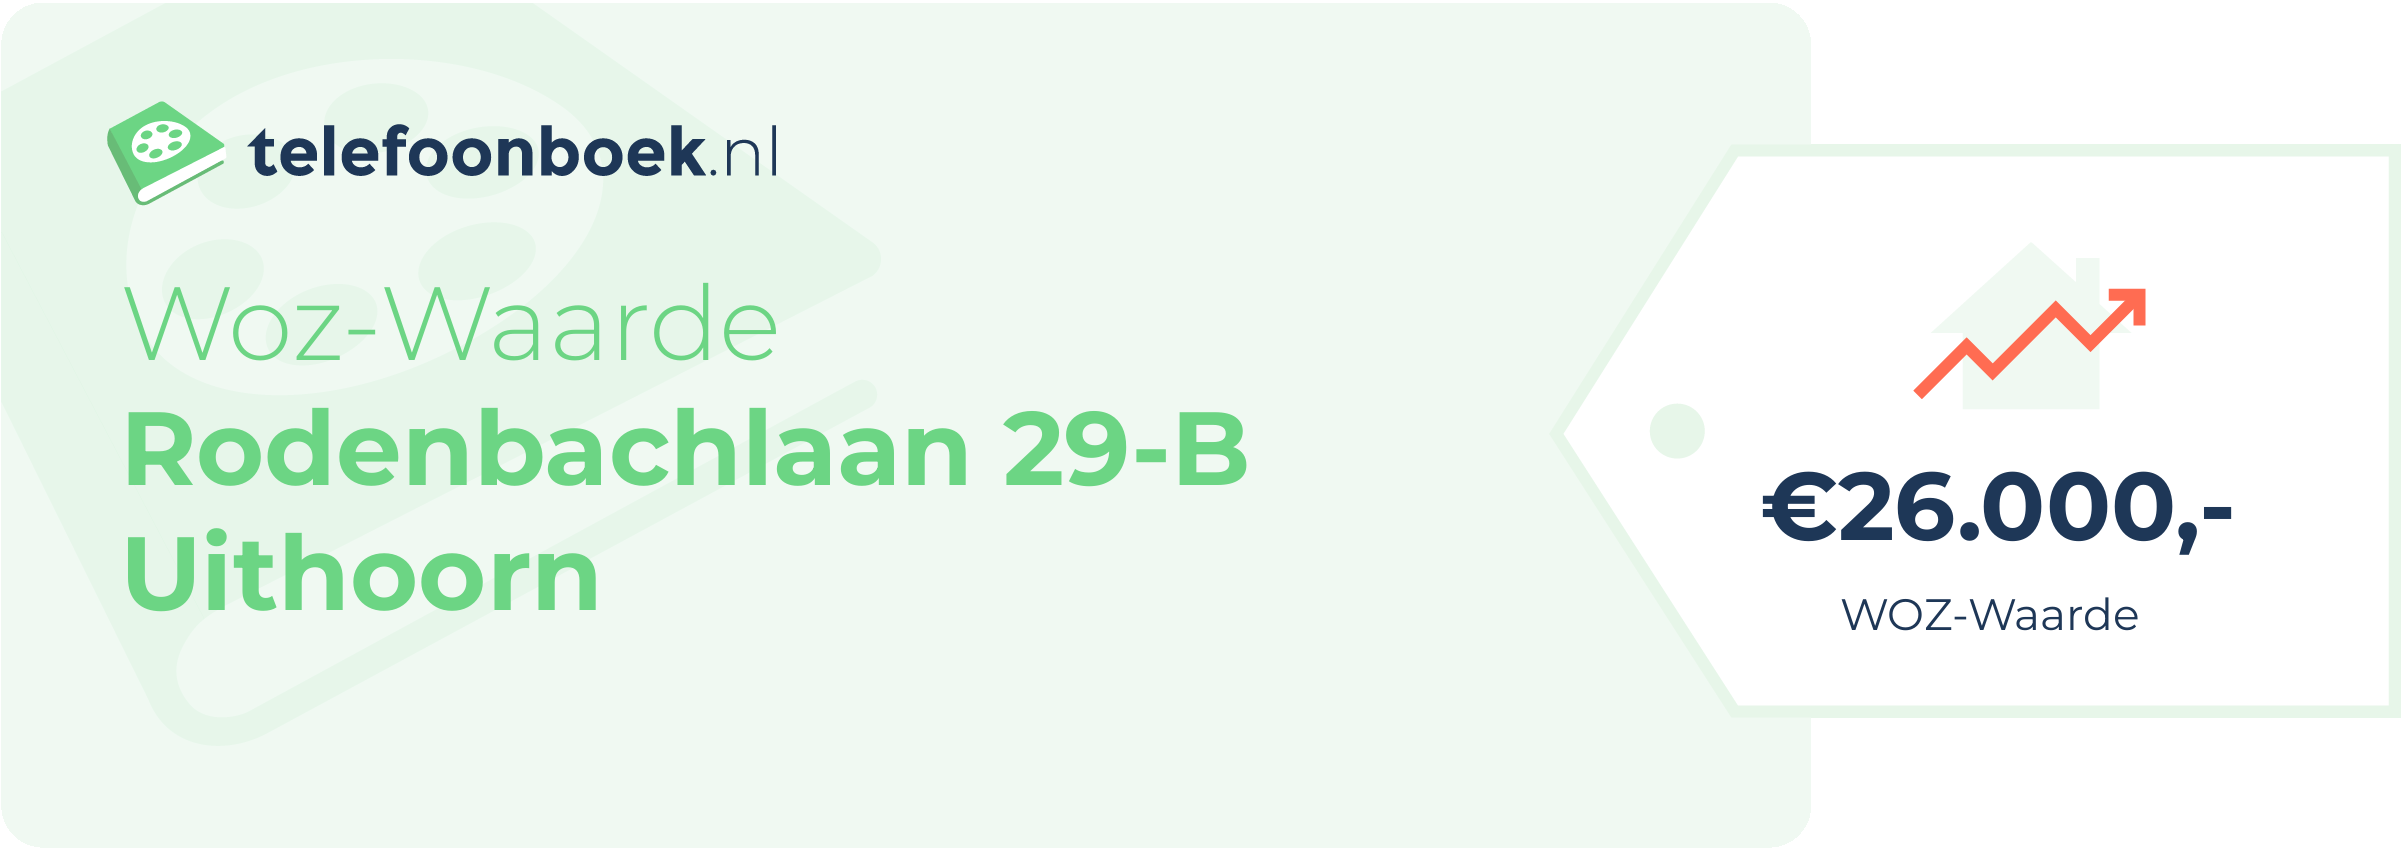 WOZ-waarde Rodenbachlaan 29-B Uithoorn